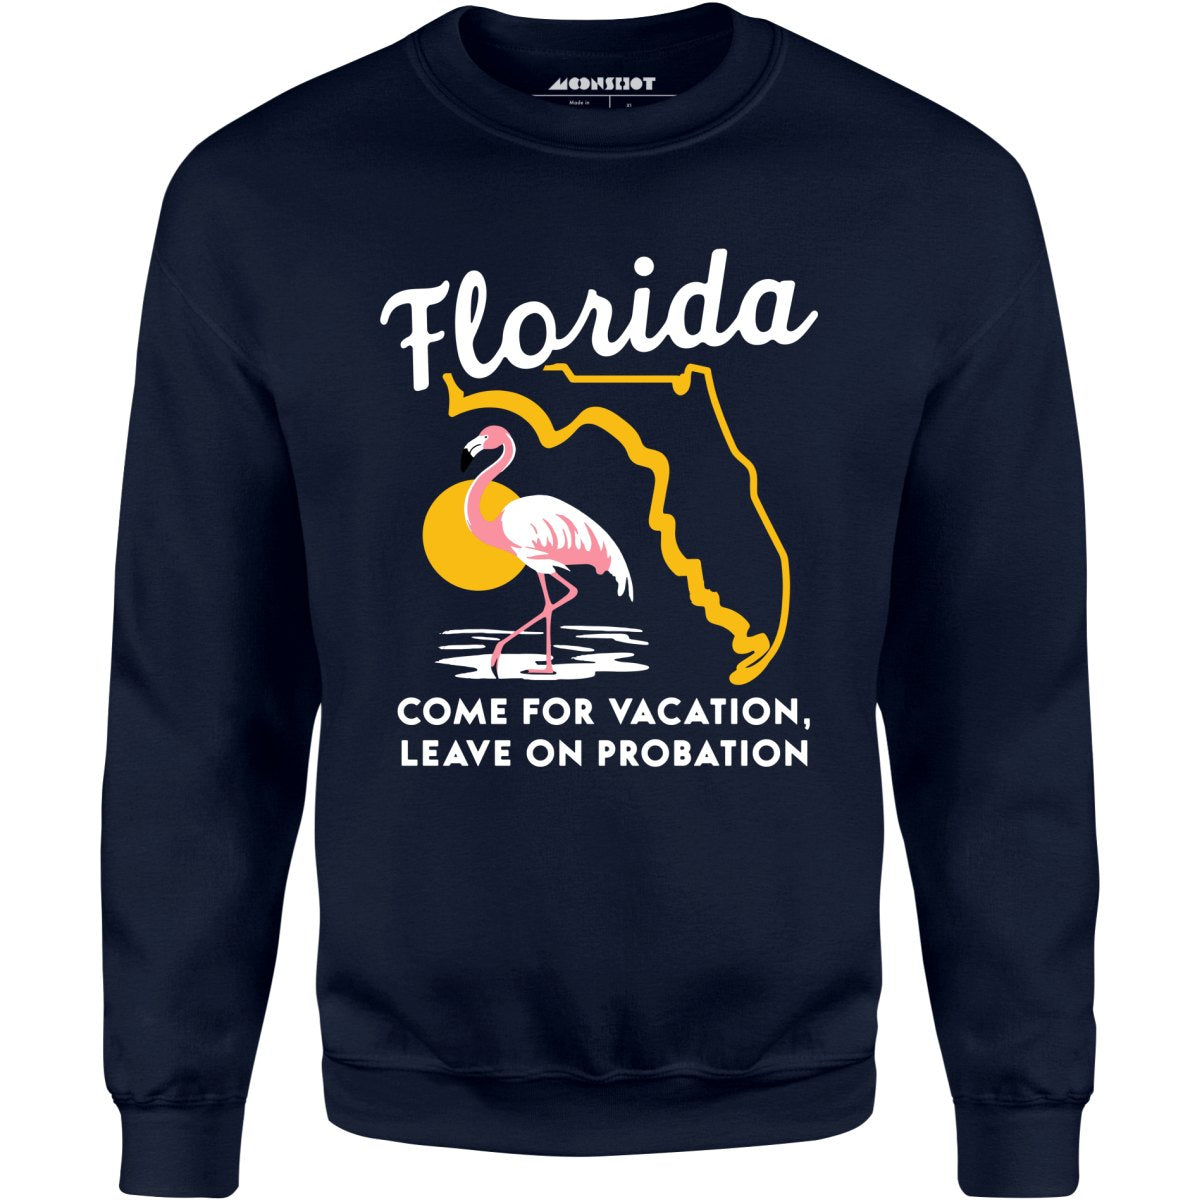 Florida Travel - Unisex Sweatshirt